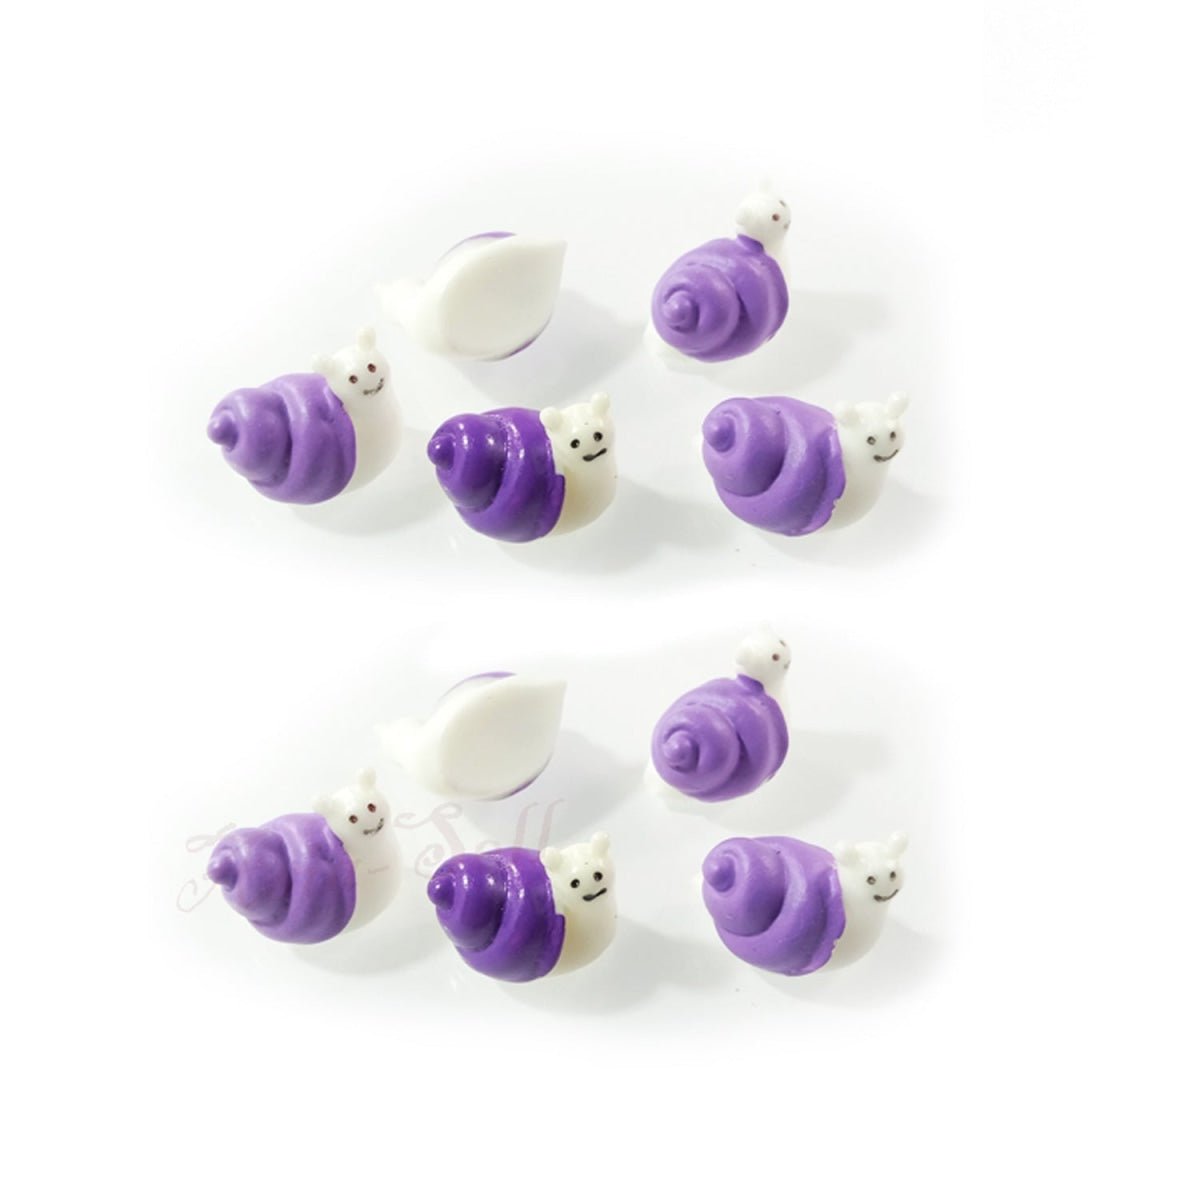 10pcs Miniature Mini Garden Cow Rabbit Snail Unicorn Animal Figurines Craft Set B - Purple Snails - - Asia Sell